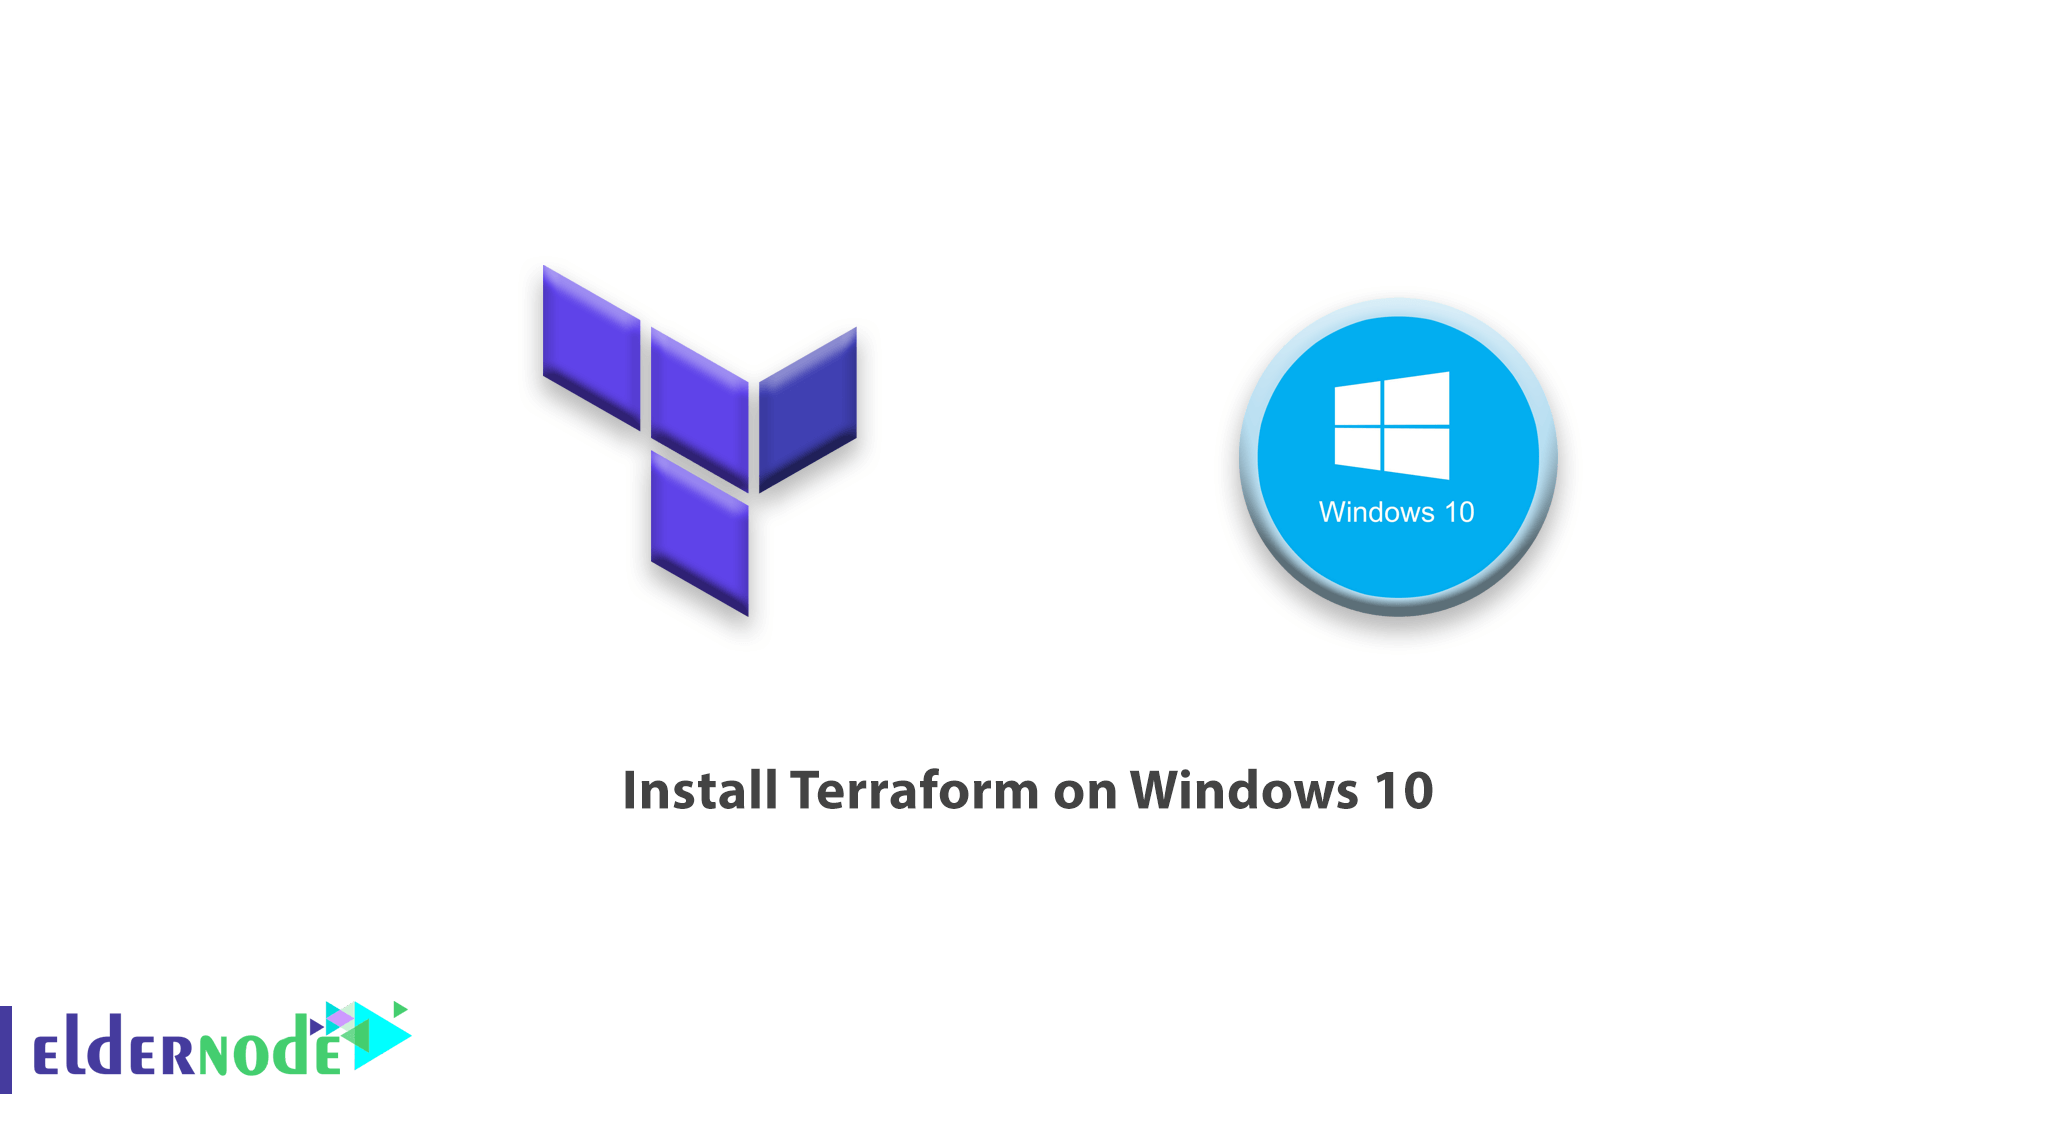 How to Install Terraform on Windows 10